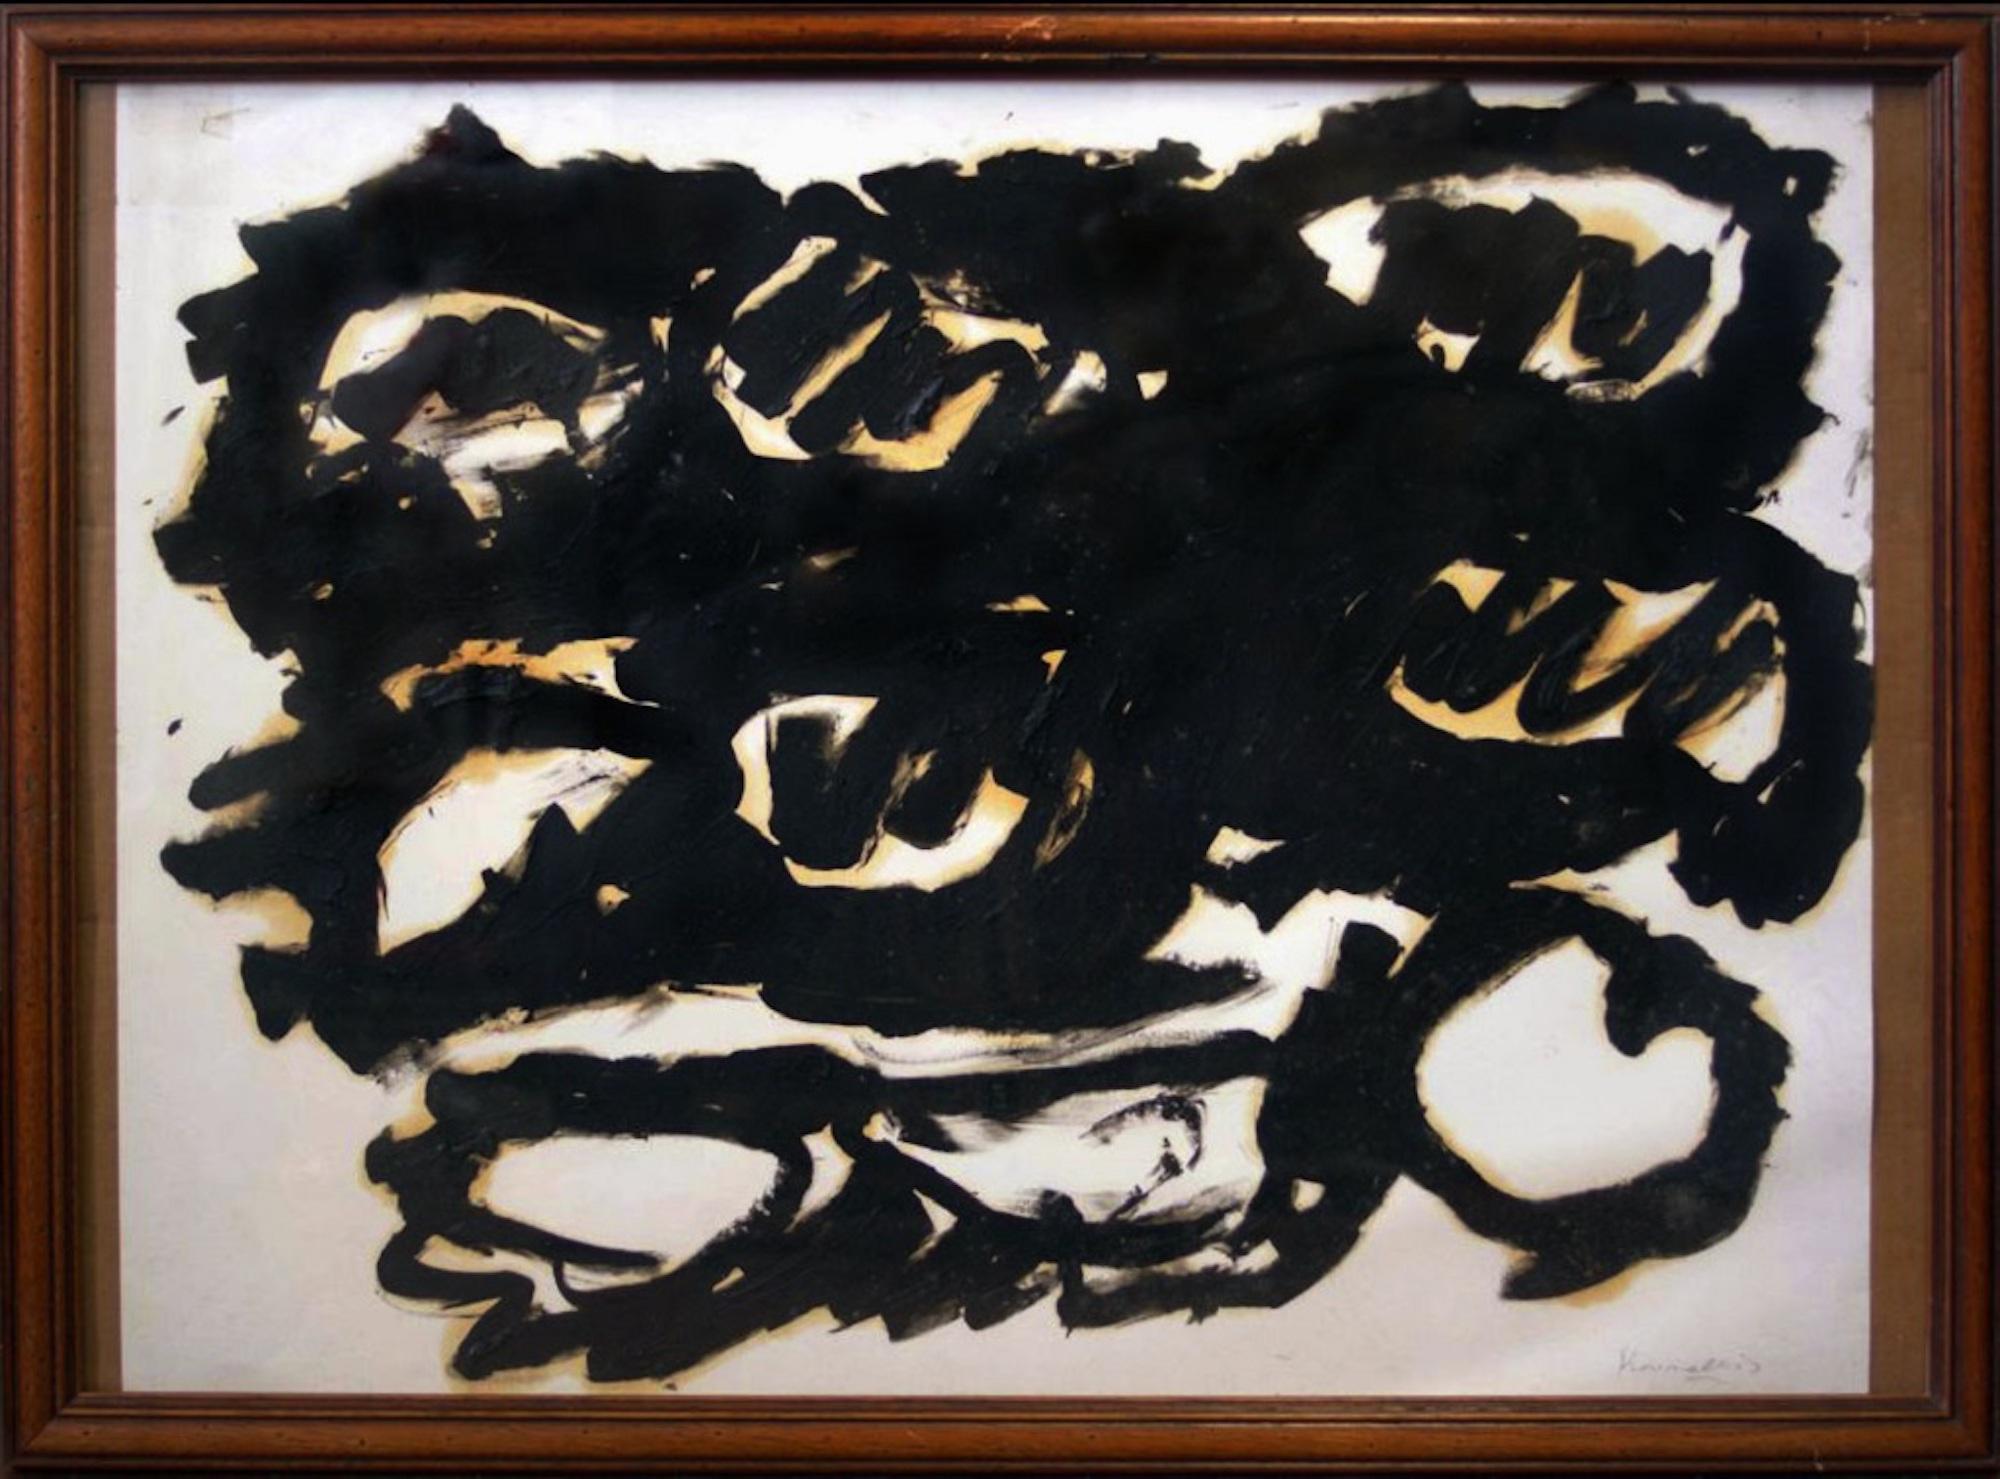 Jannis Kounellis Abstract Painting - Untitled - Original Oil on Paper by Yannis Kounellis - Late 20th Century